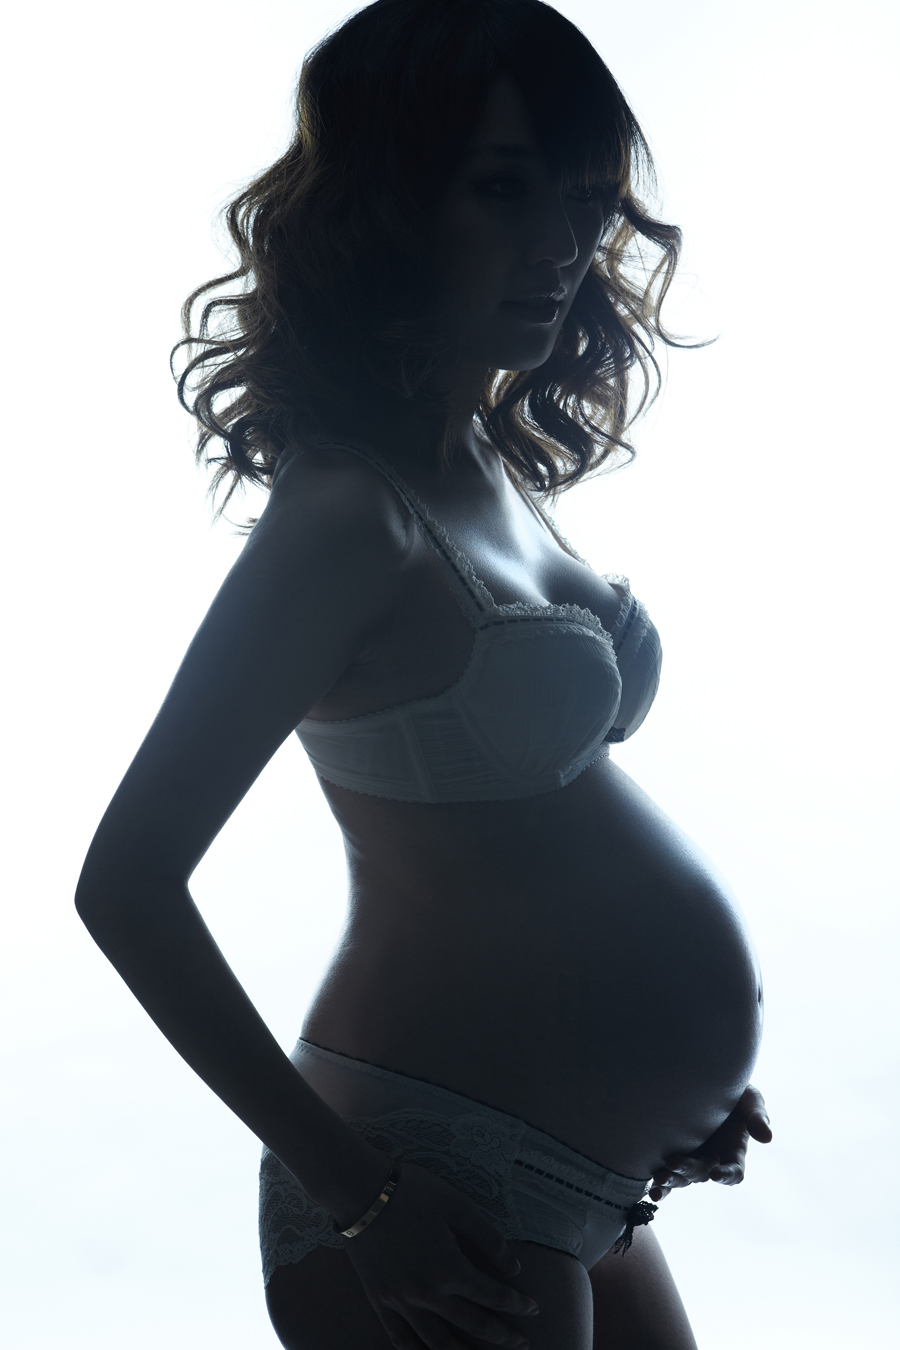 pregnant_woman_by_yychanson-d4xpk8f.jpg